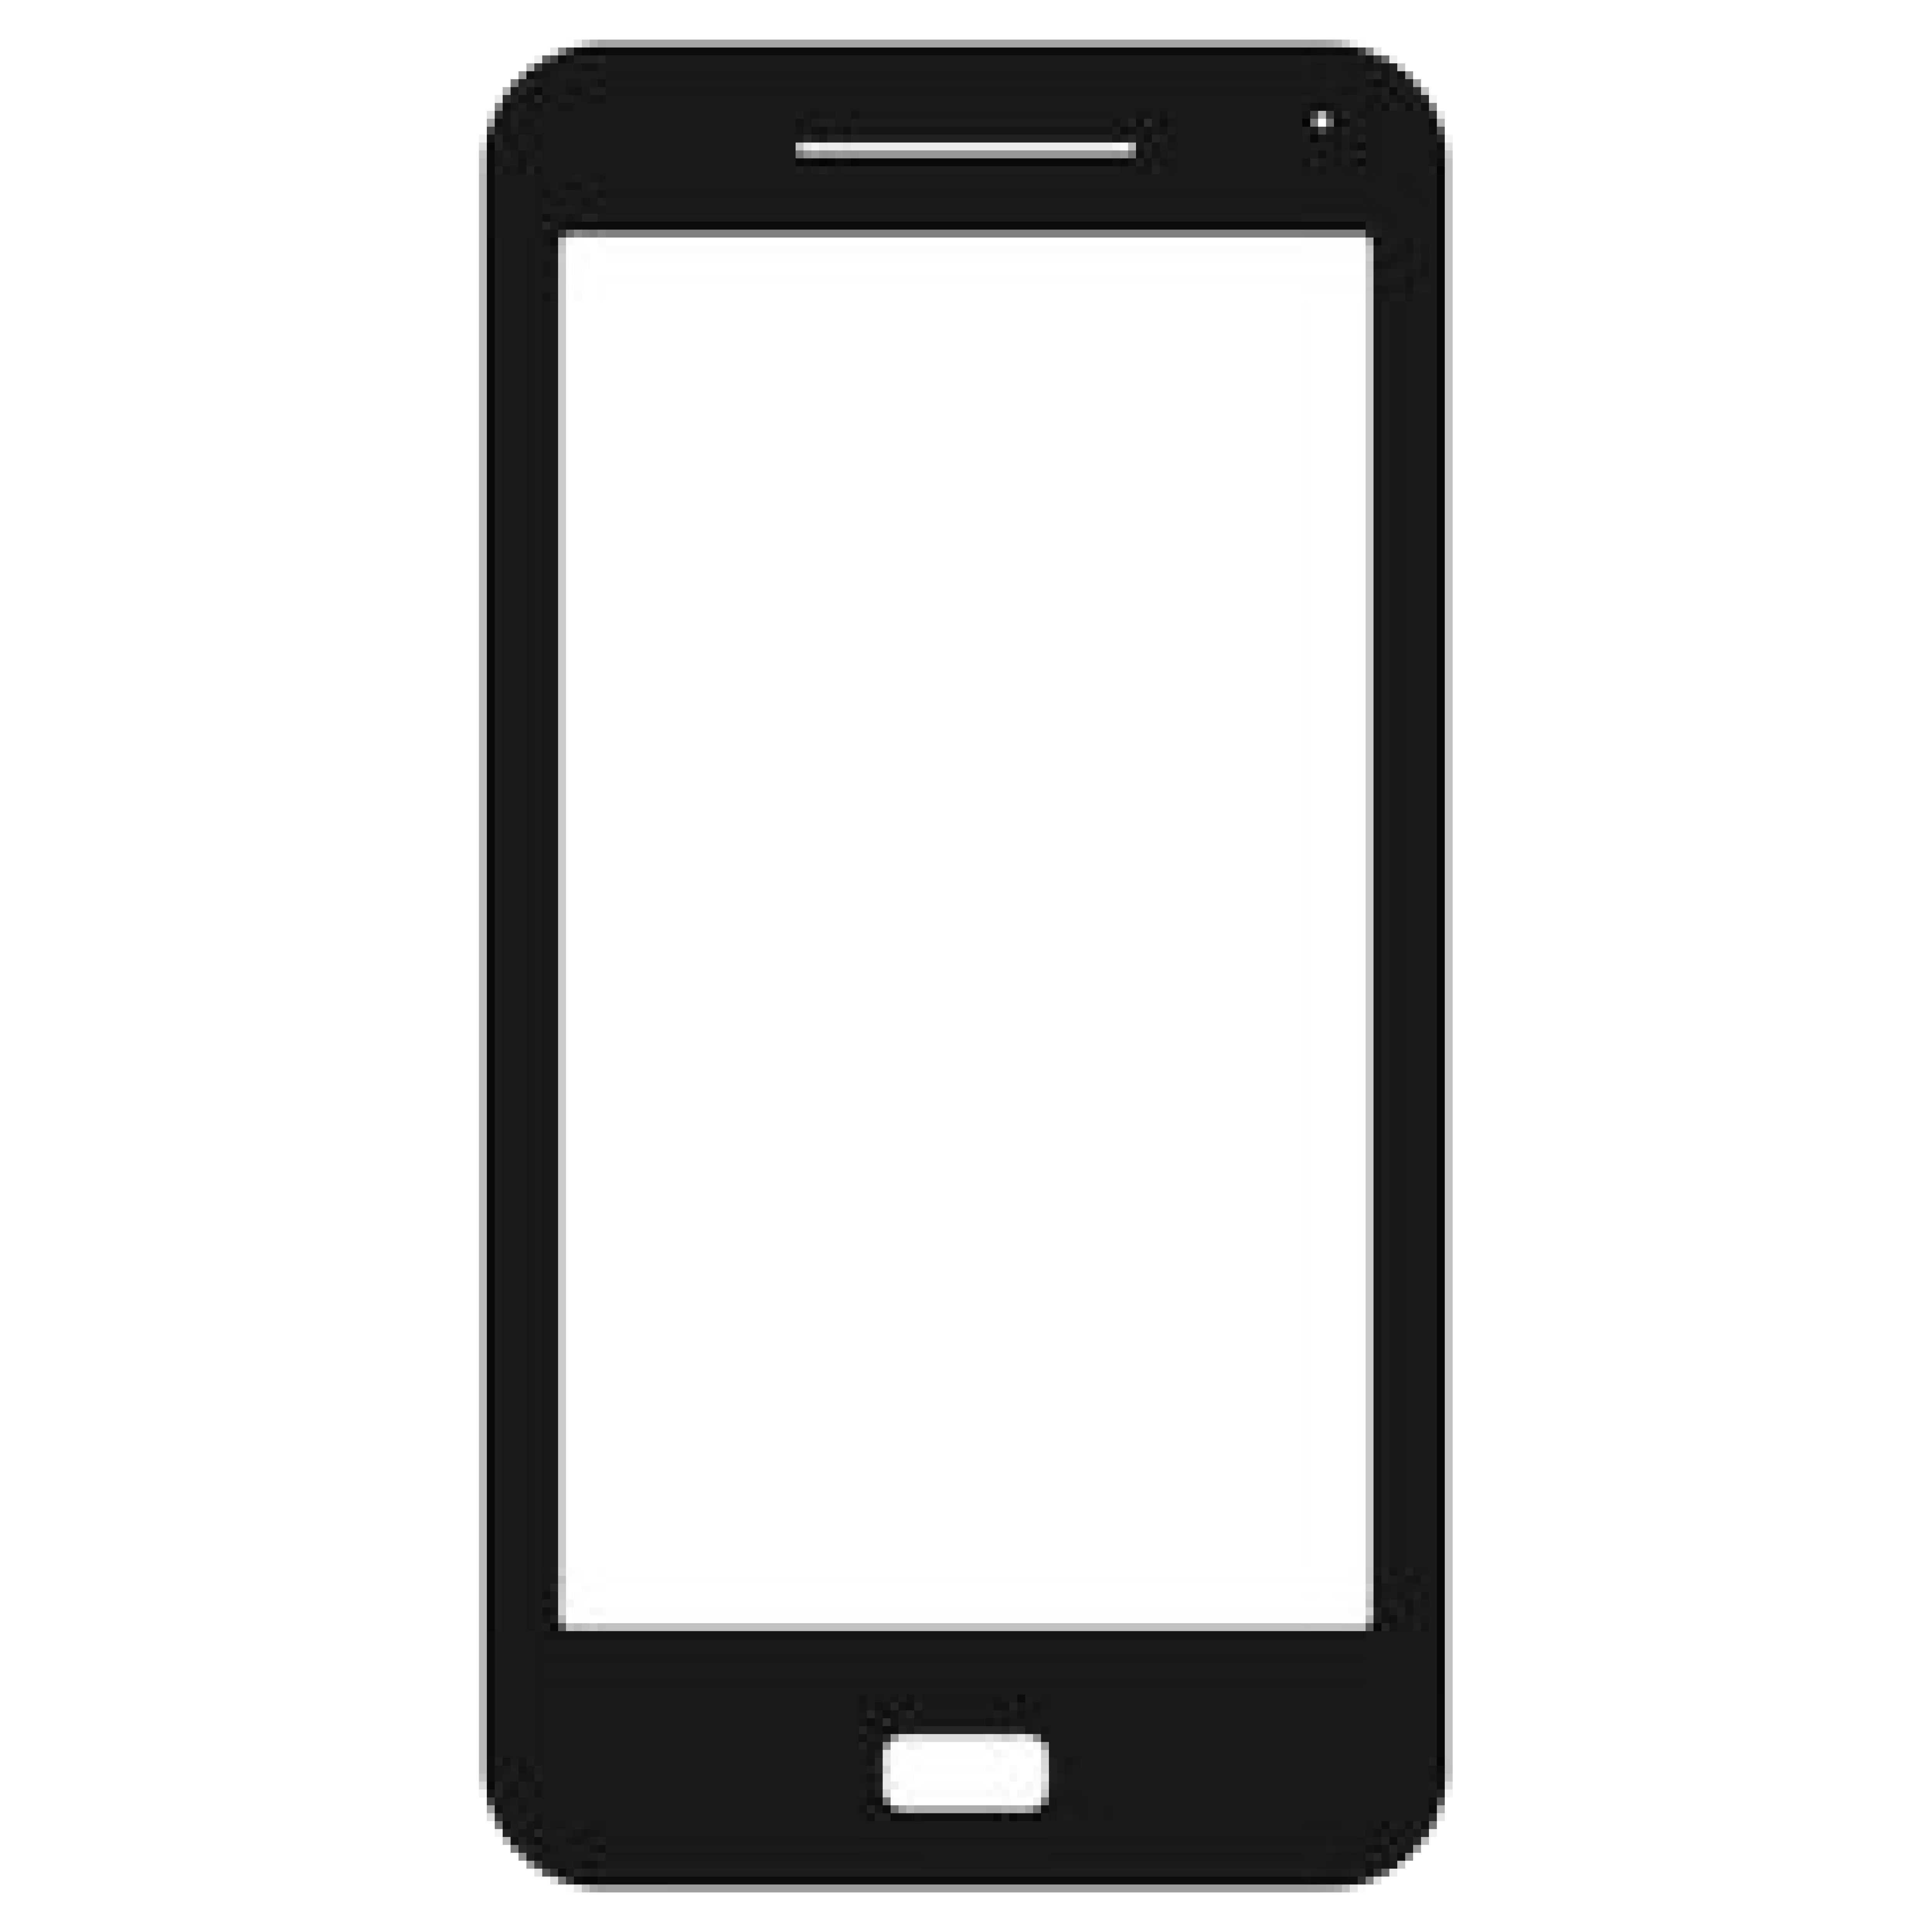 Phone symbol signifying app downloads